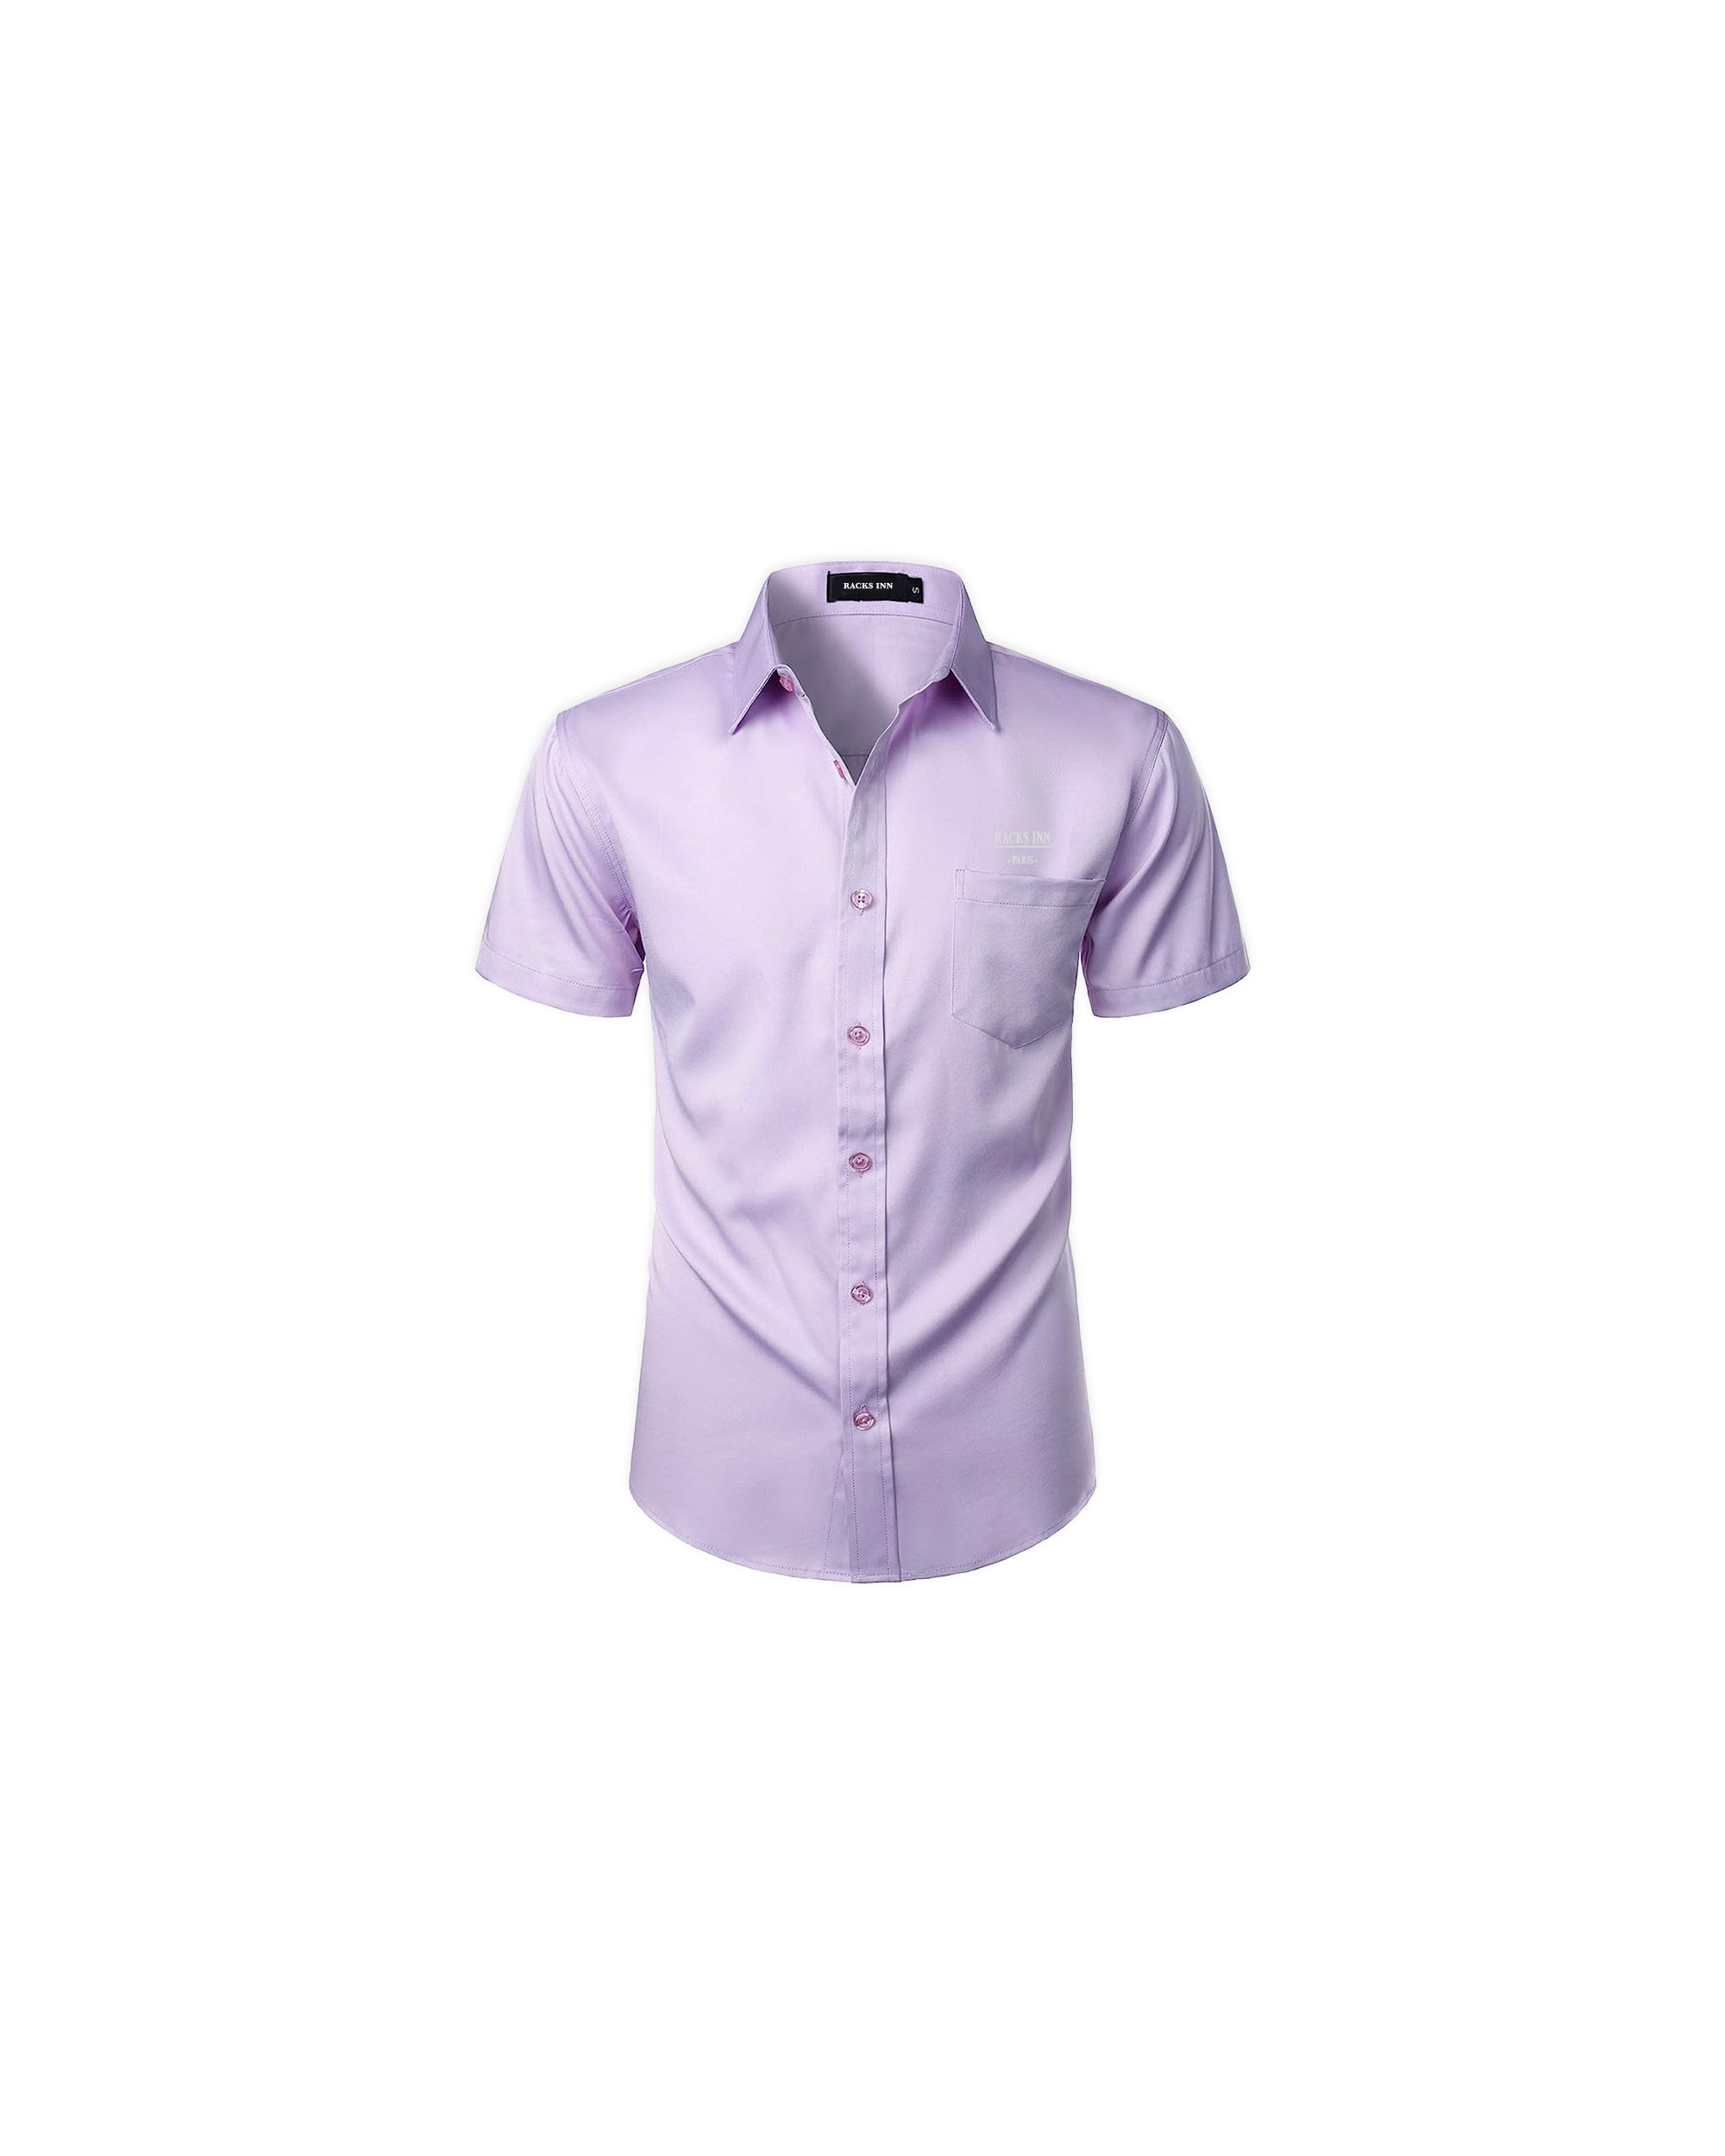 Paris Casual Shirt - Lavender